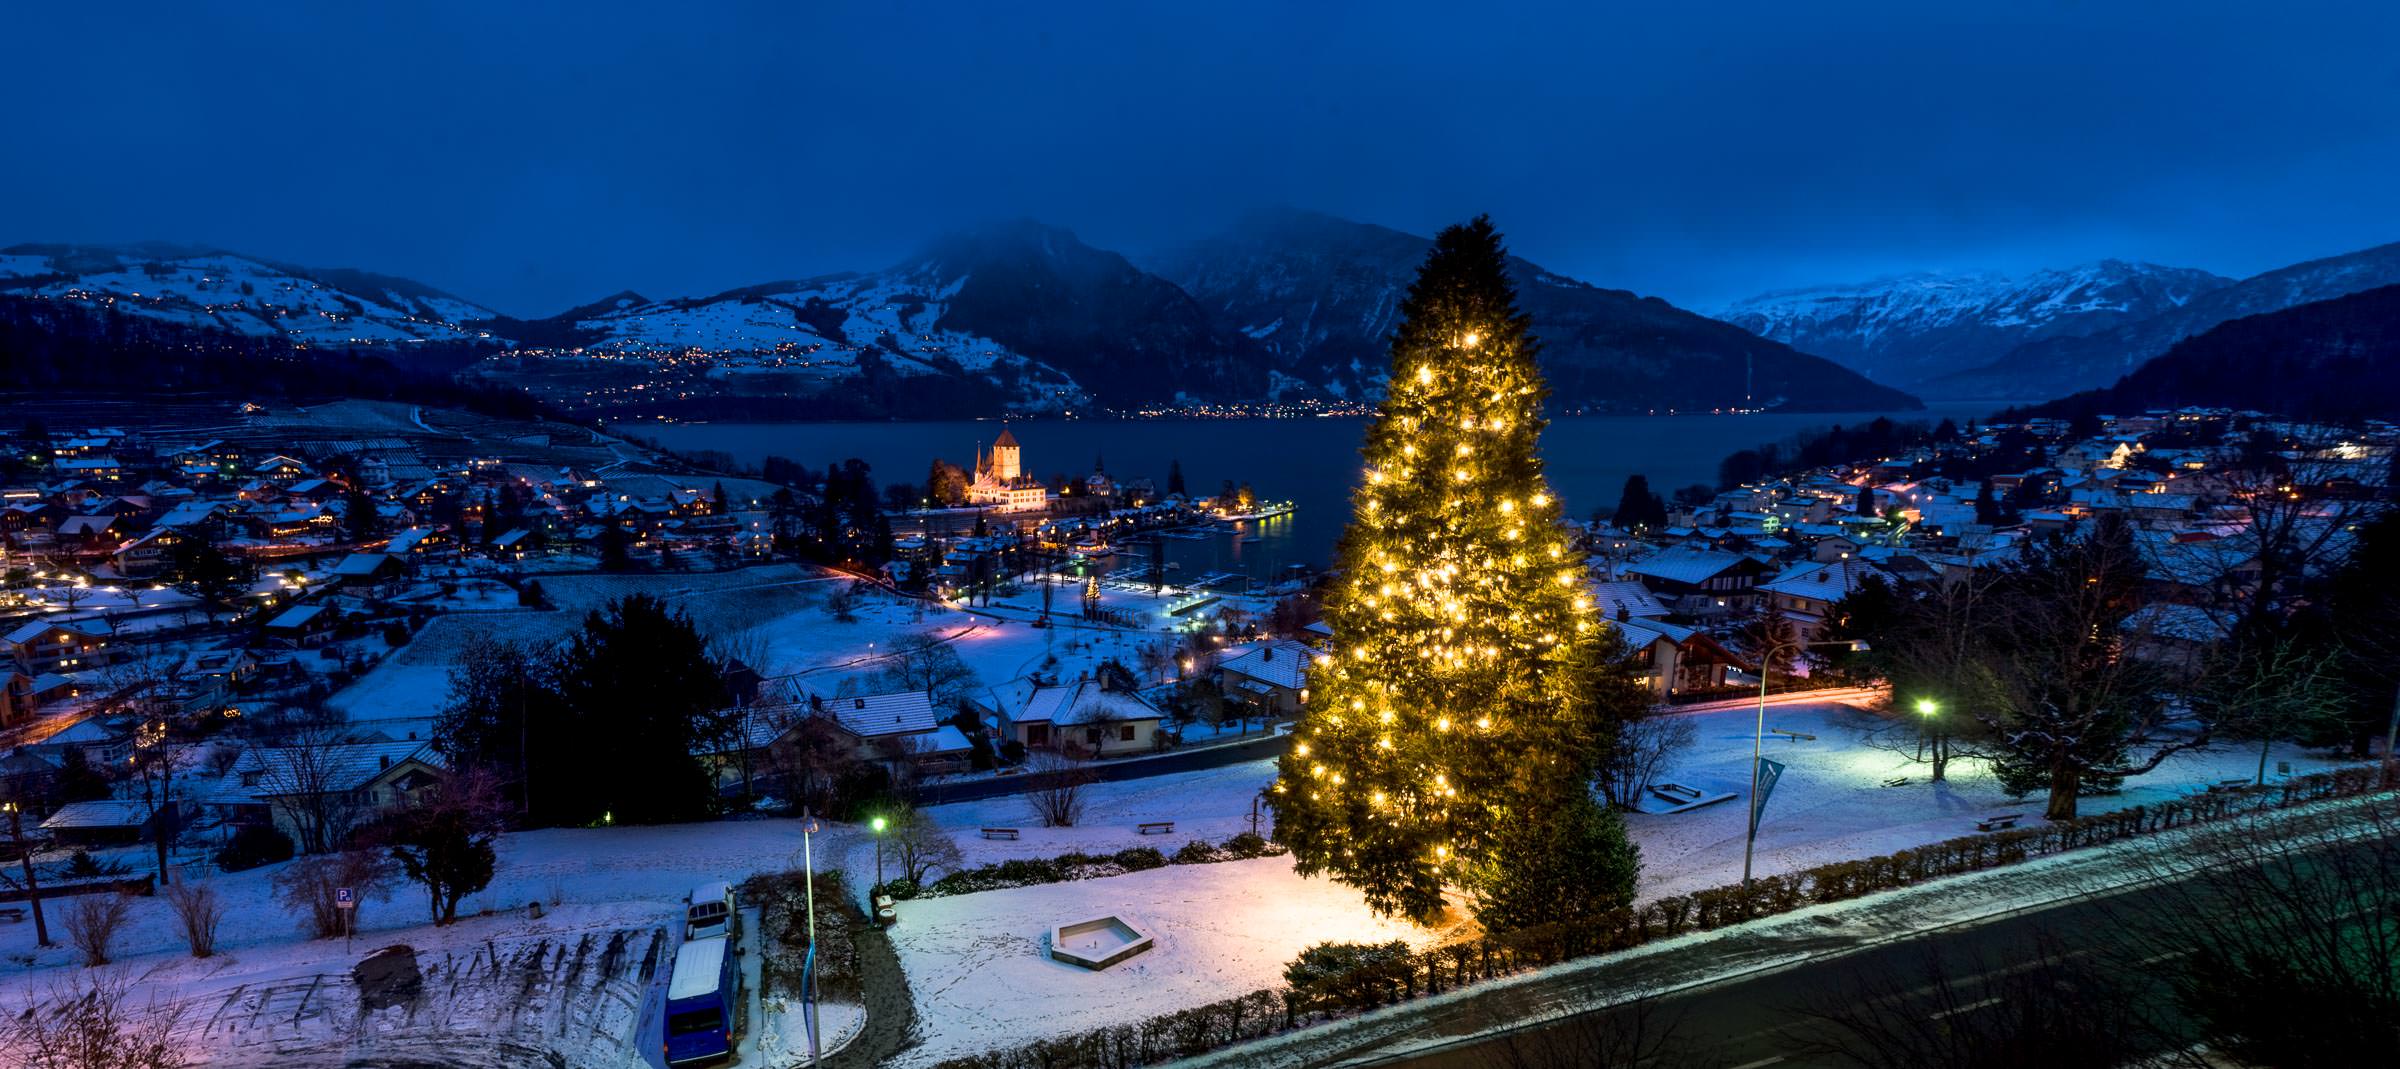 Large Christmas tree, Spiez, Switzerland